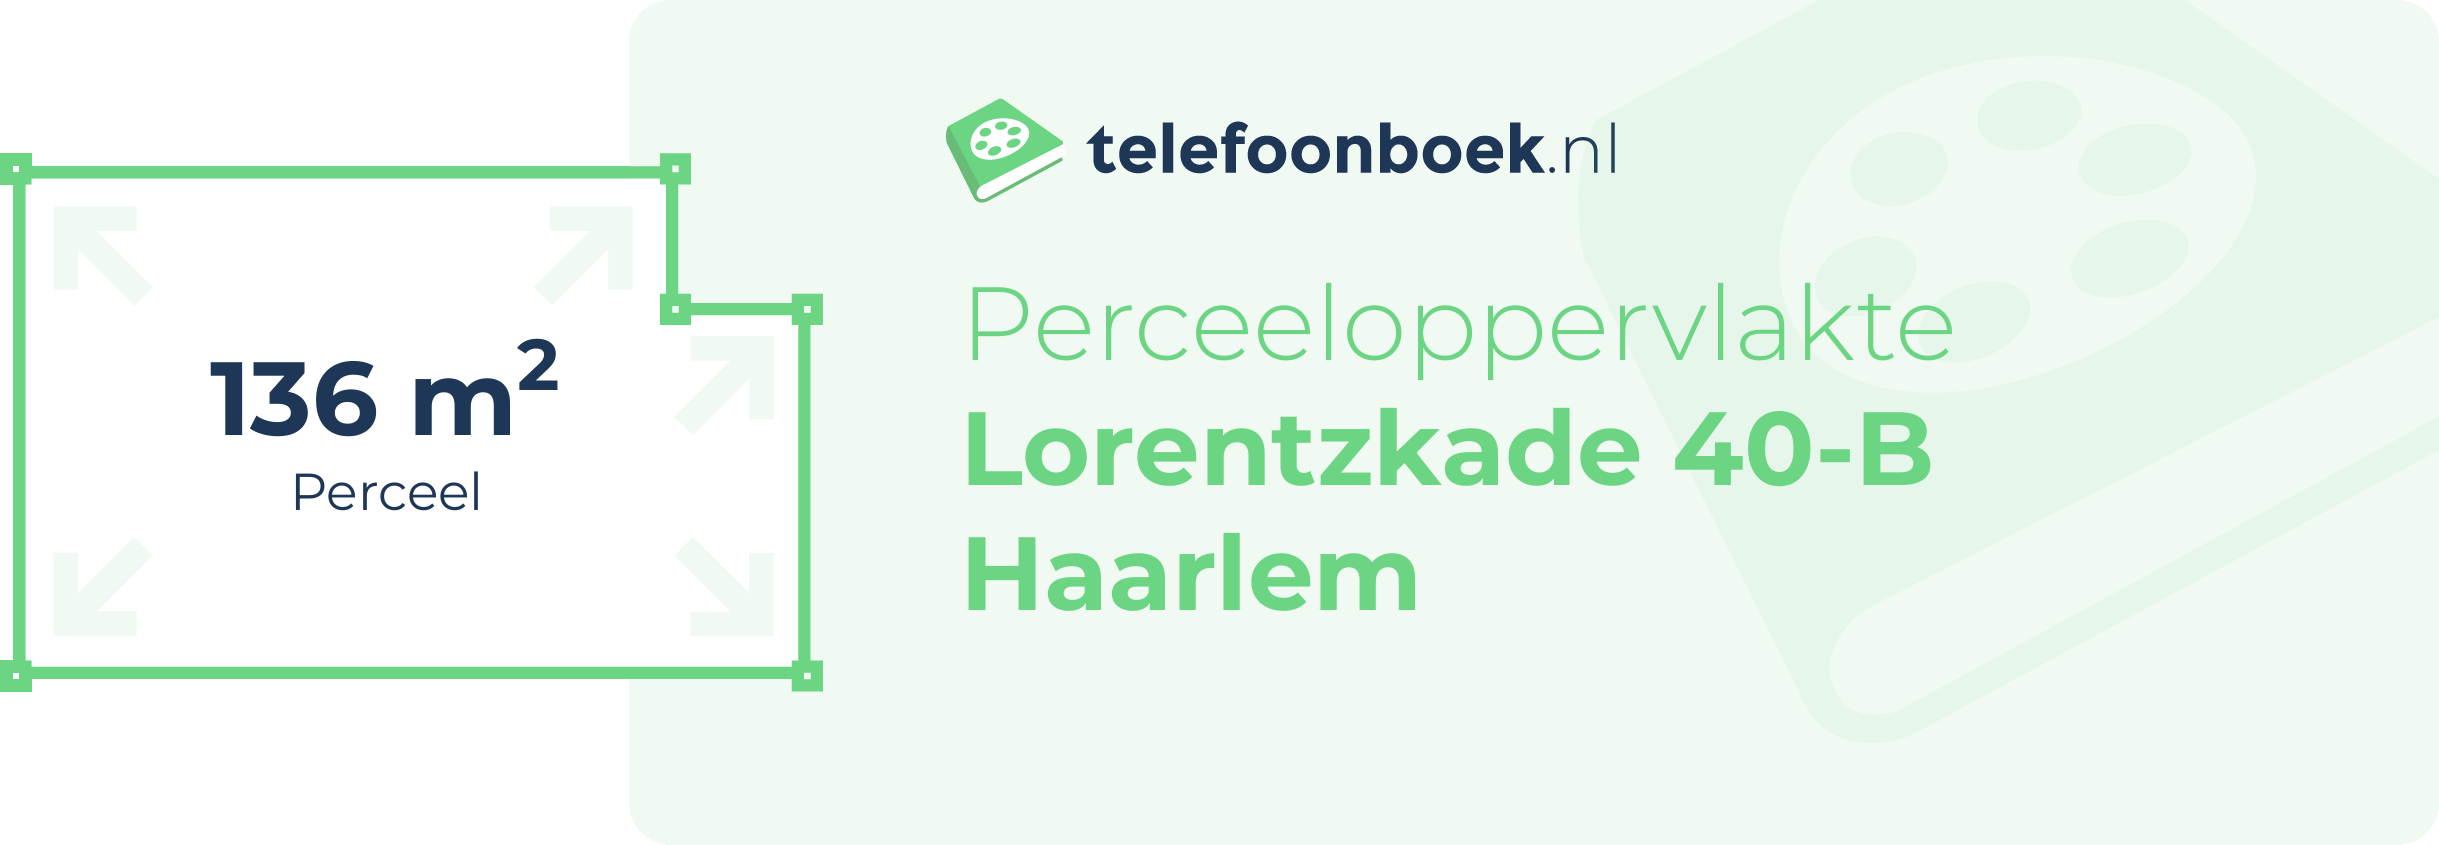 Perceeloppervlakte Lorentzkade 40-B Haarlem